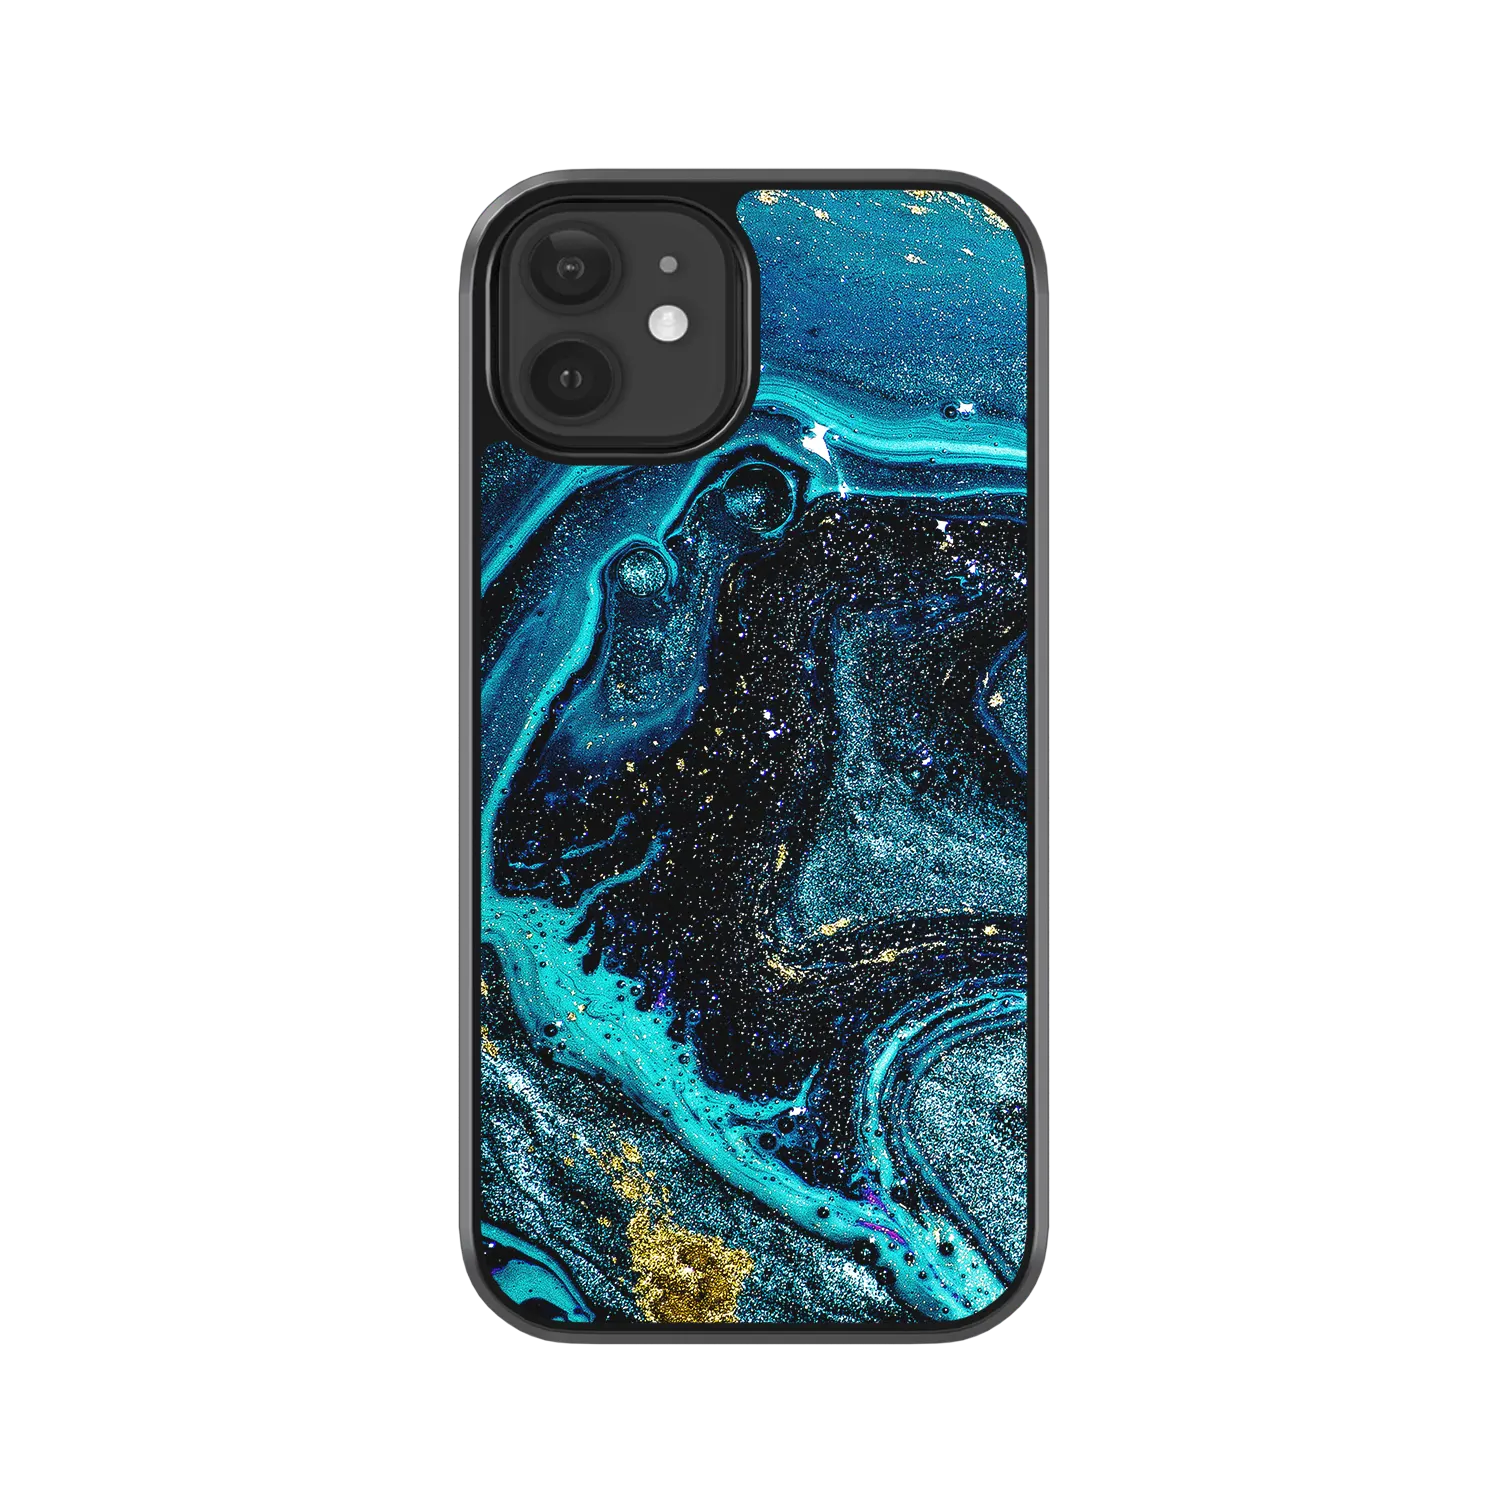 Poseidon iphone 11 cover